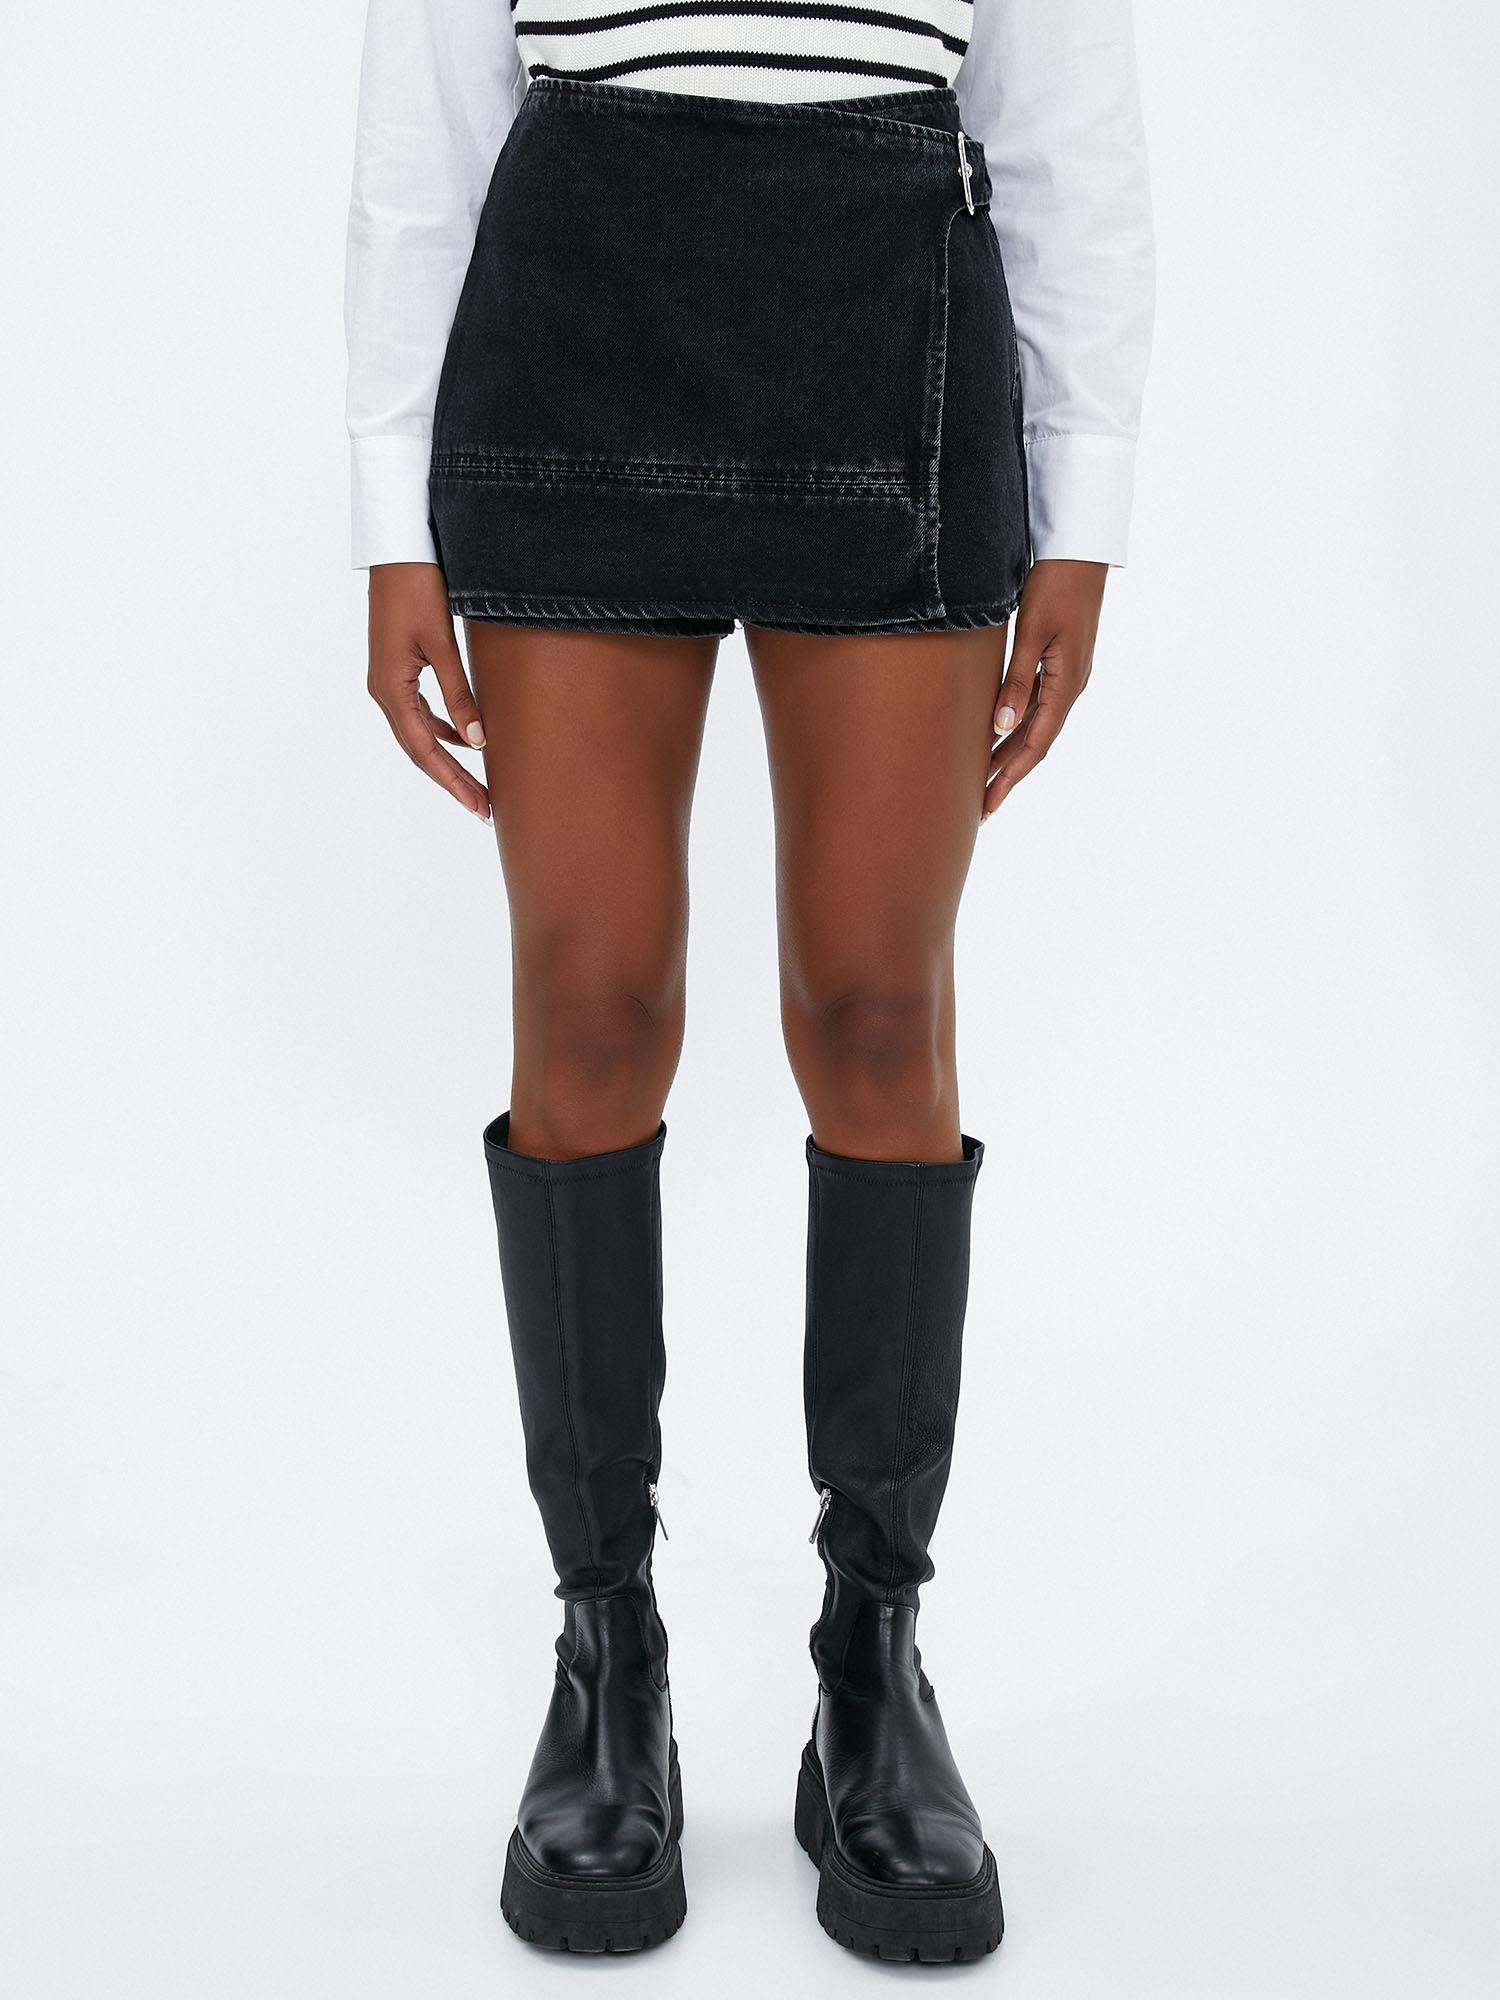 black mini skirt